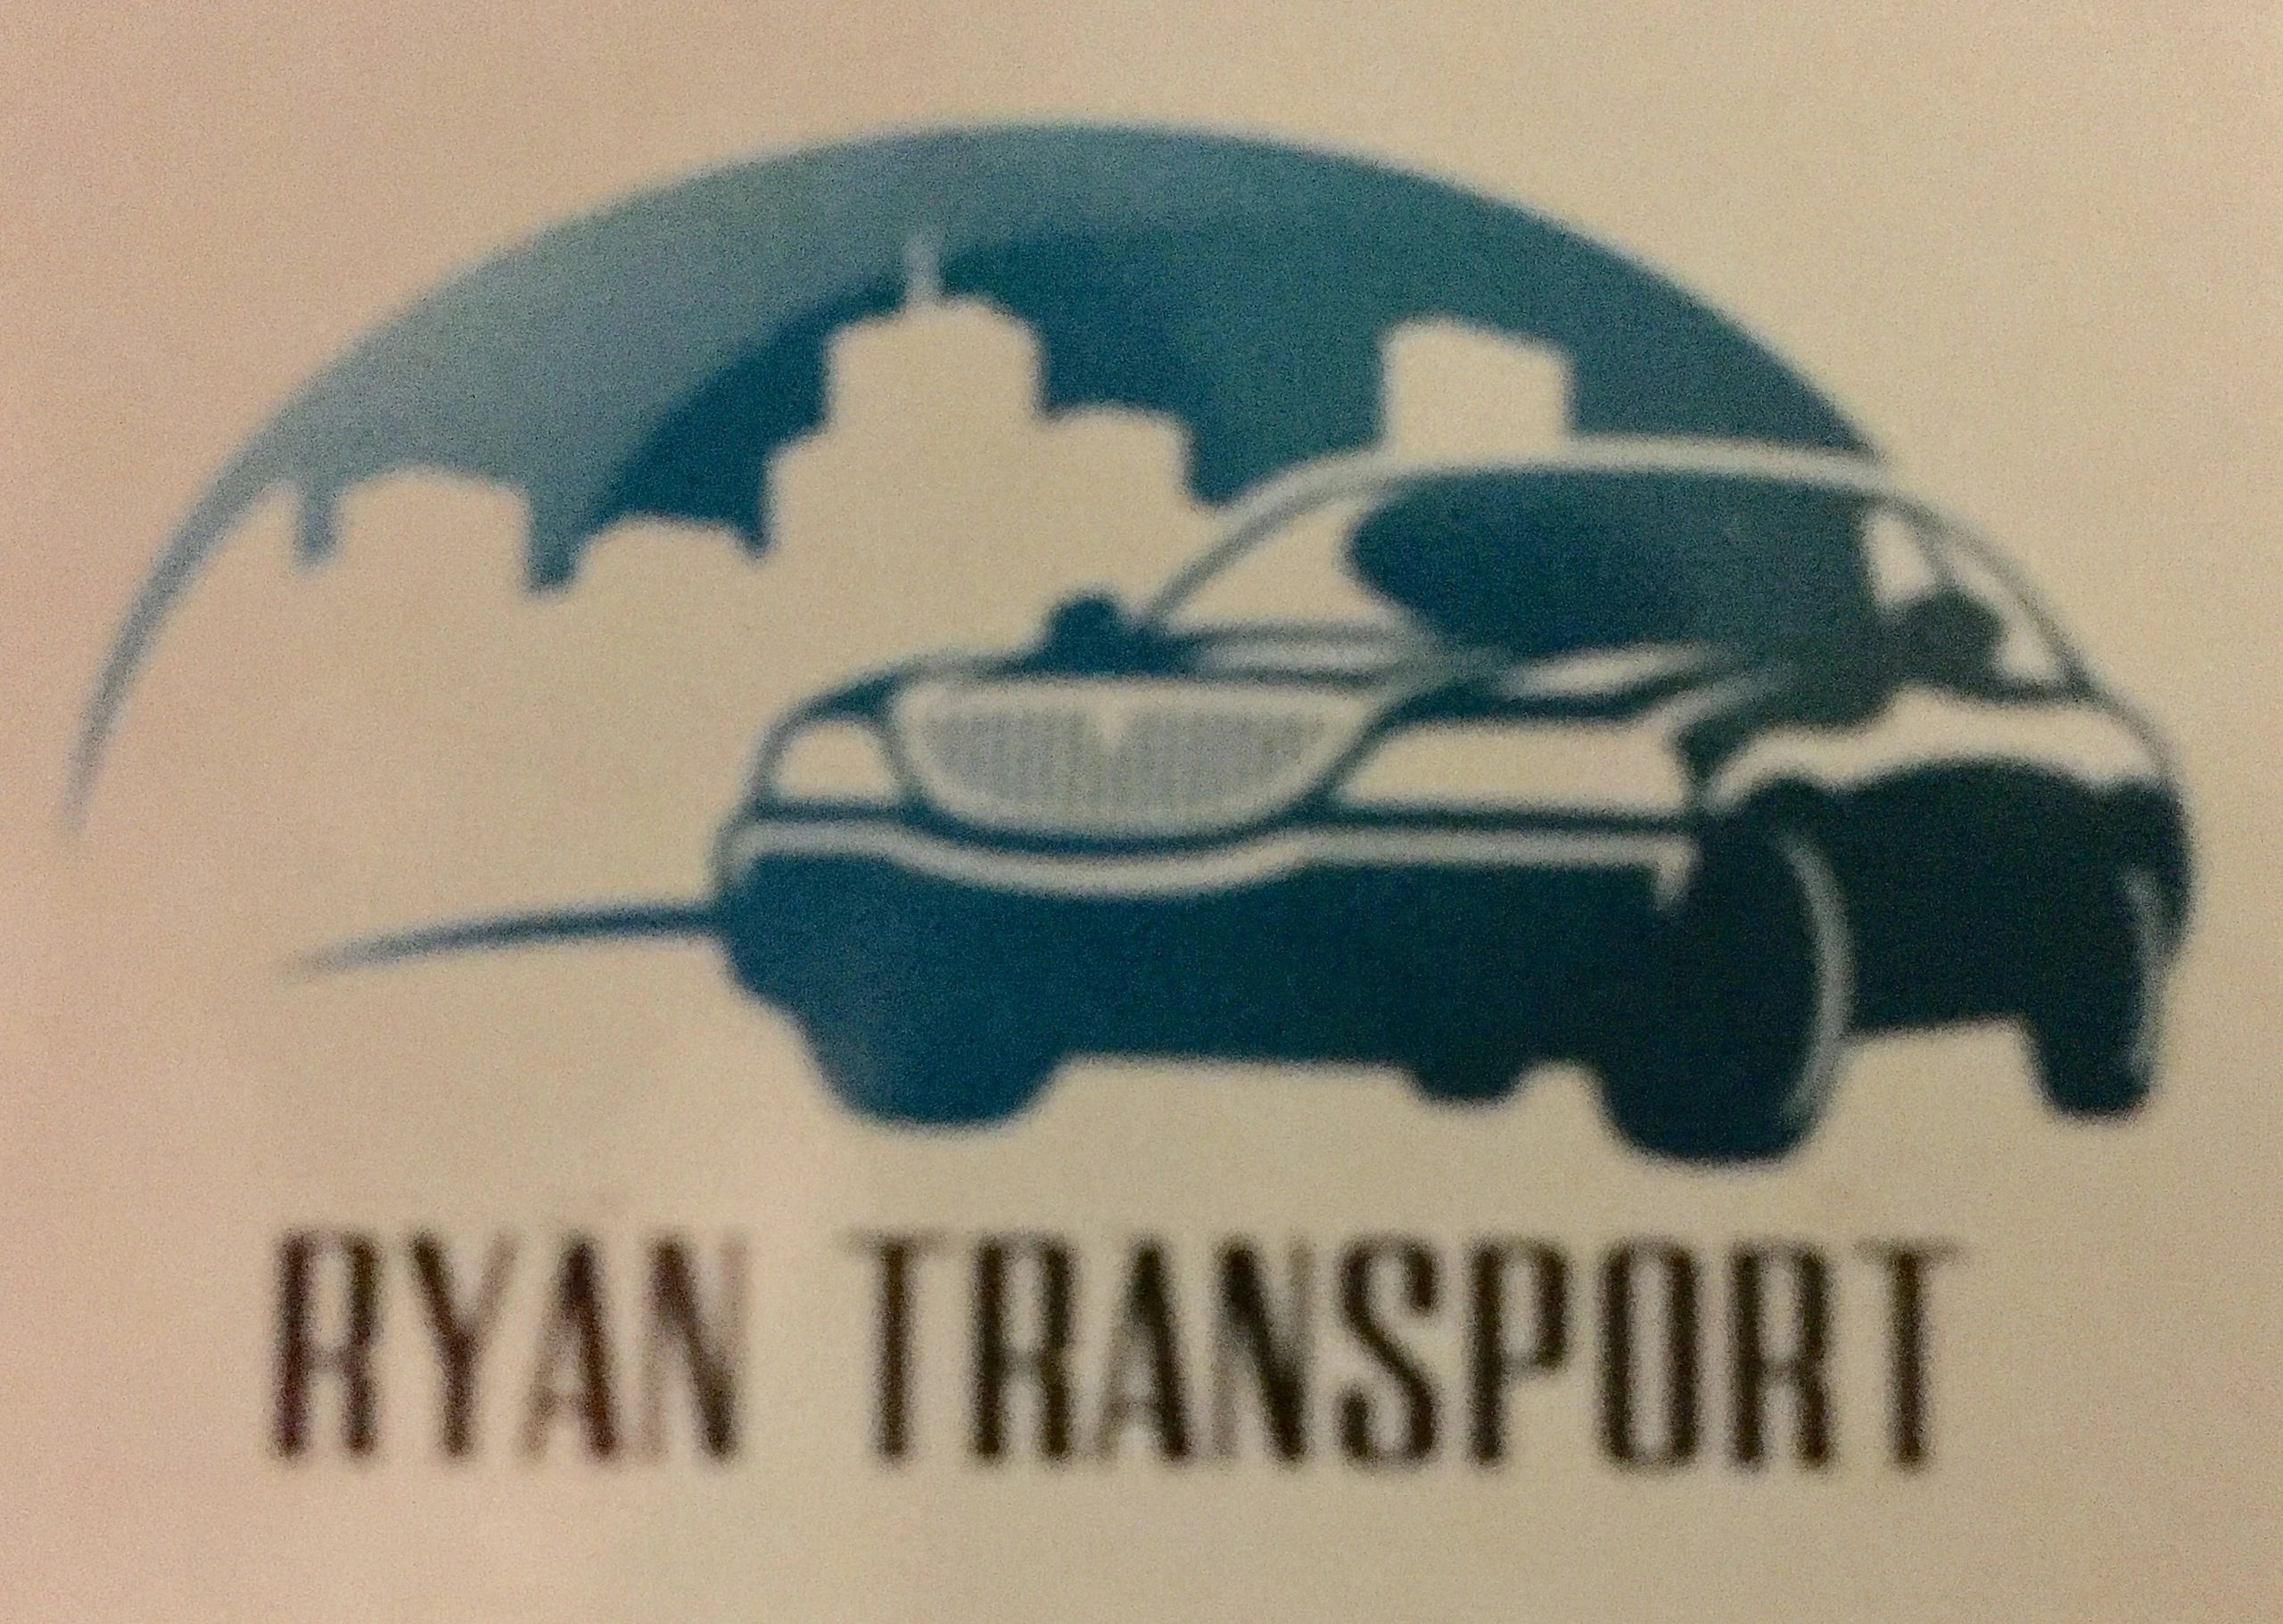 Ryan Transport